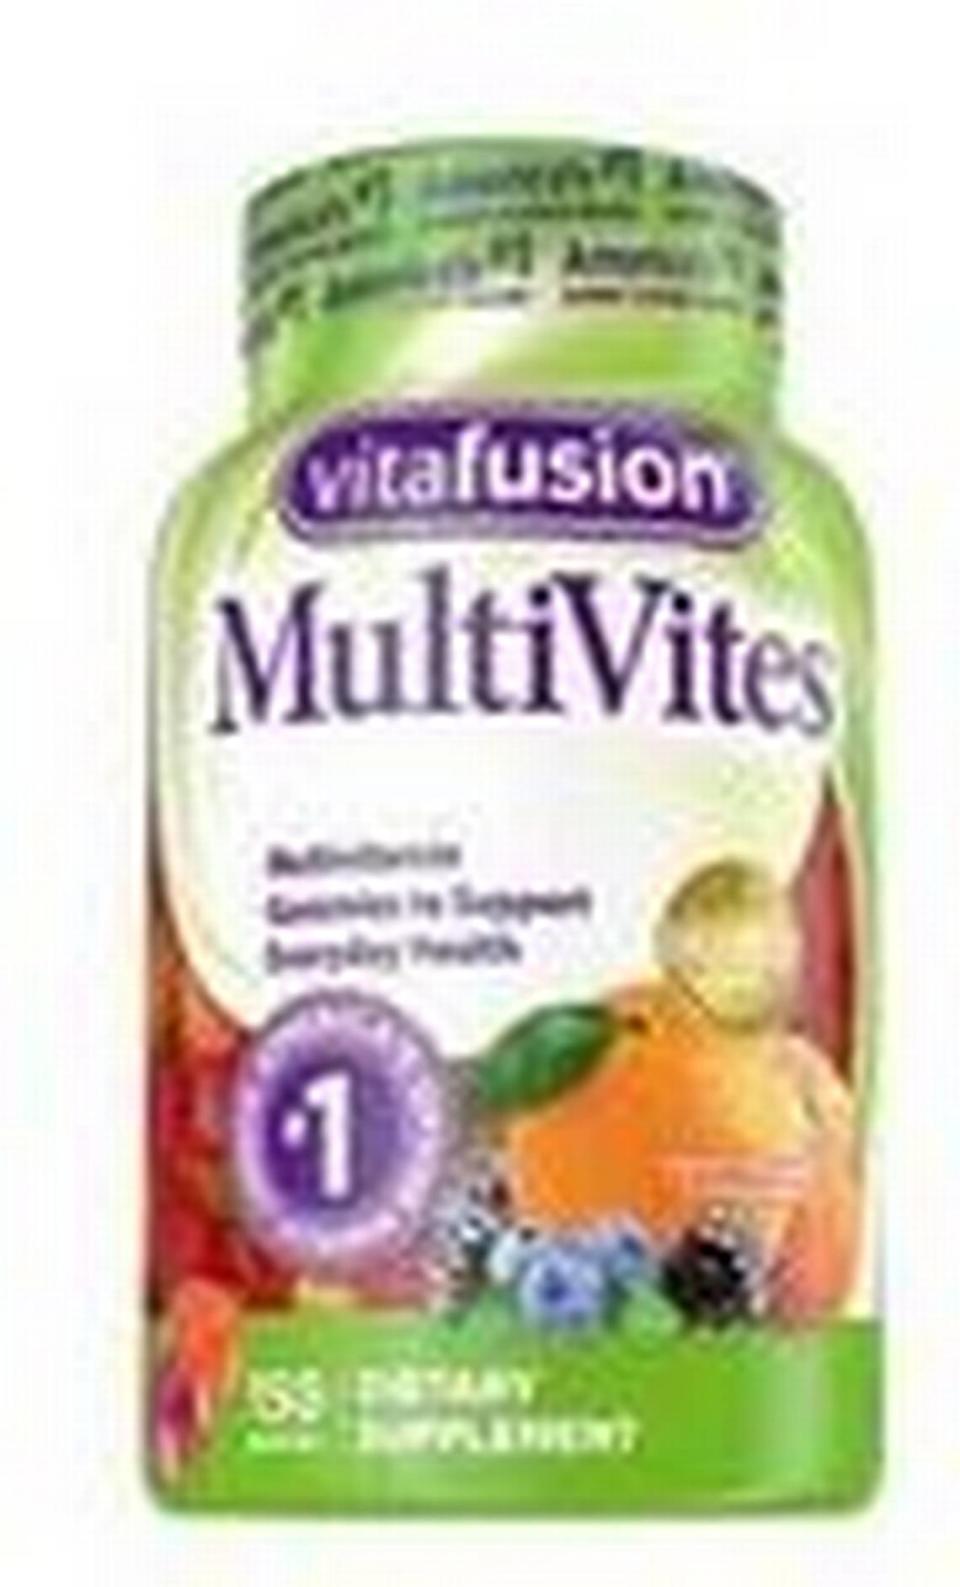 vitaFusion MultiVites